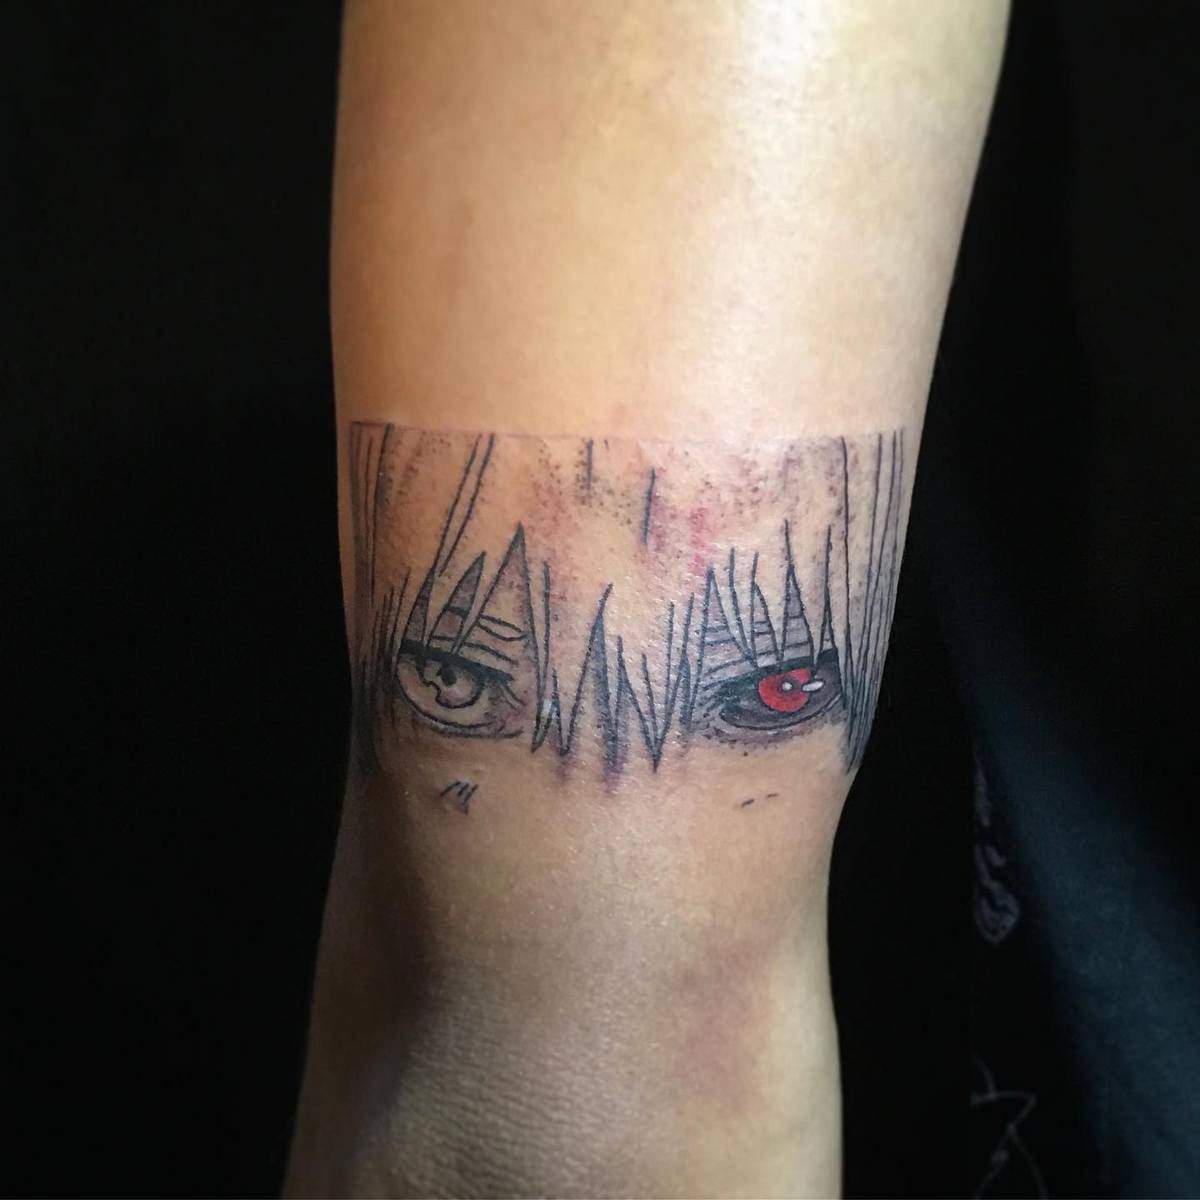 Alexandra Nevarez - Tattoo Artist - Self-employed | LinkedIn